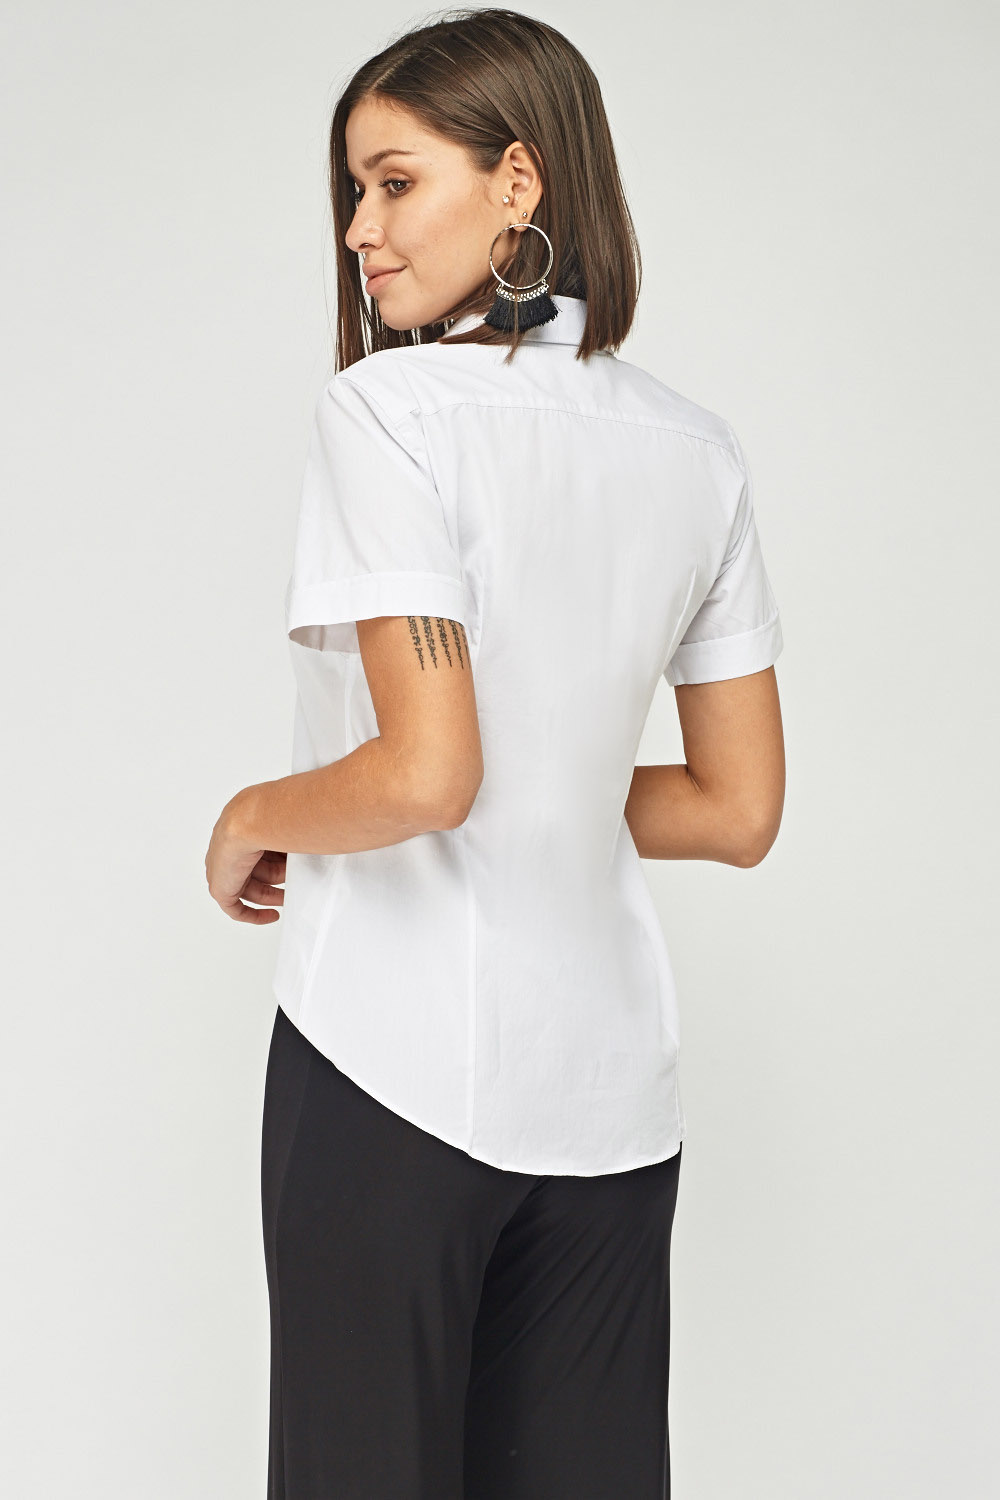 Short Sleeve White Shirt - Just $3